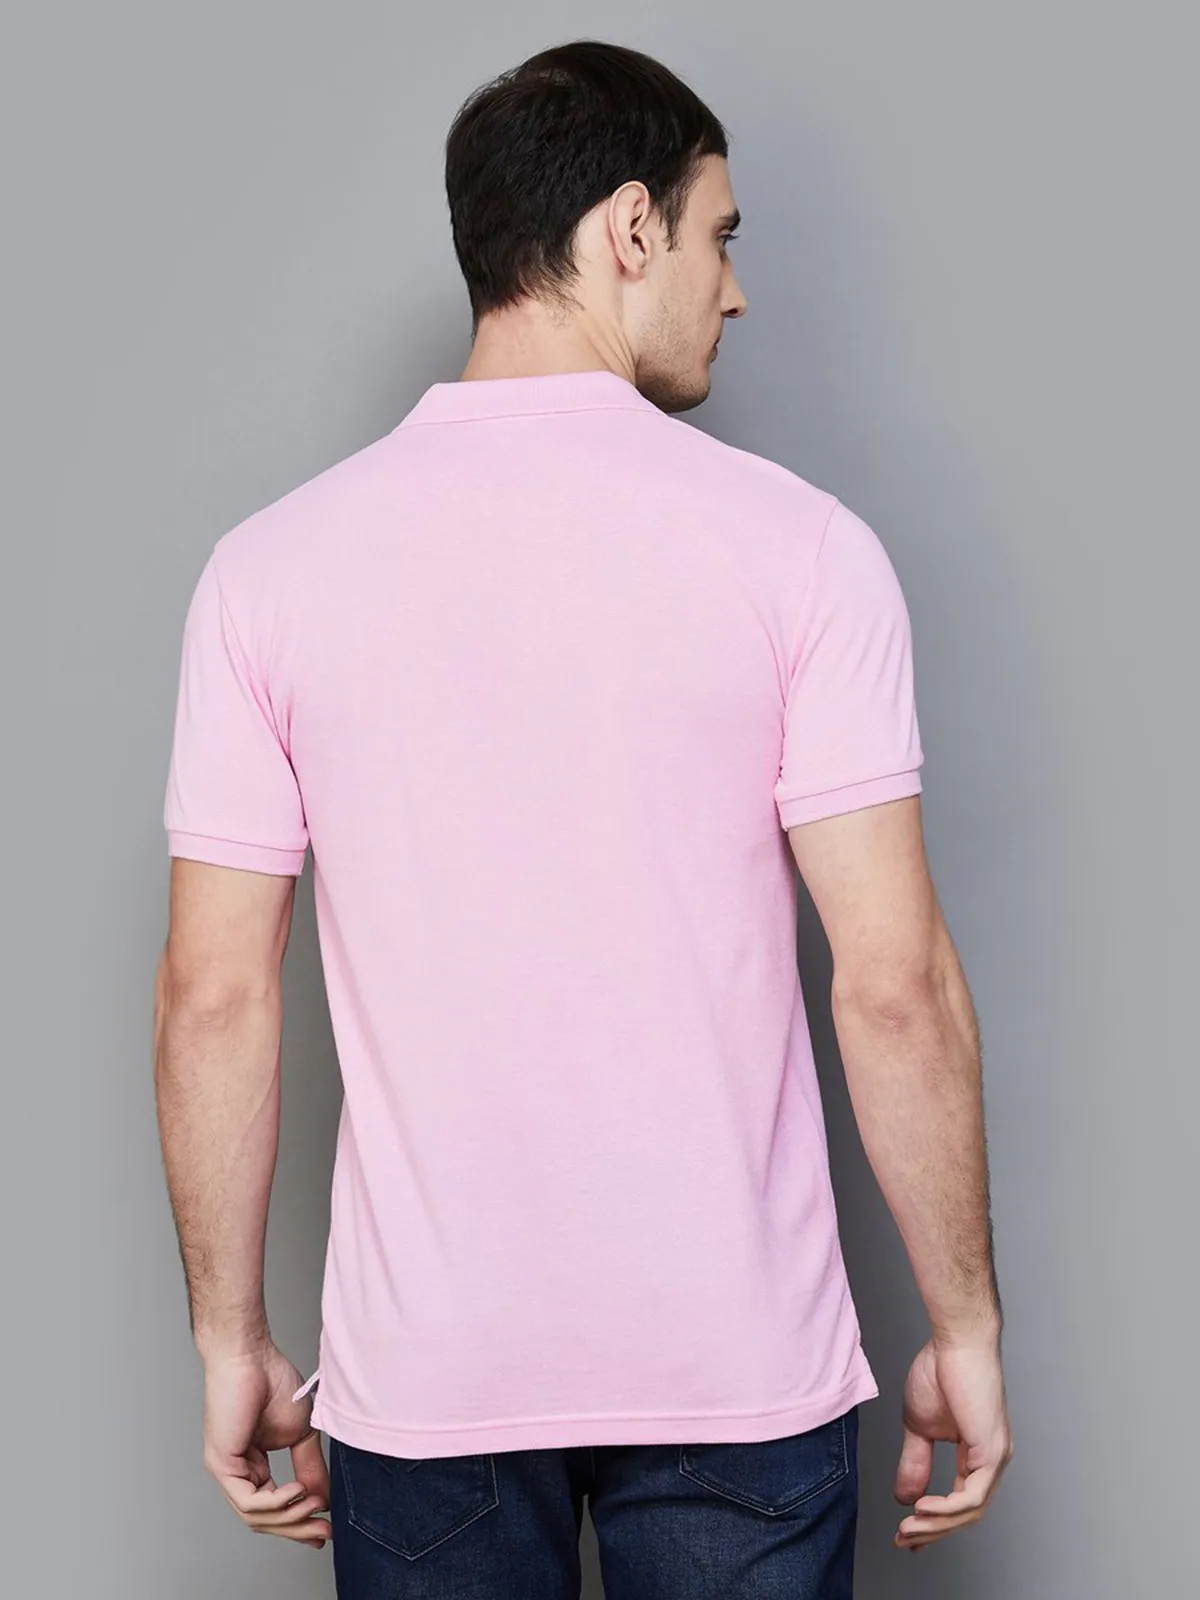 UCB cotton plain pink polo t-shirt